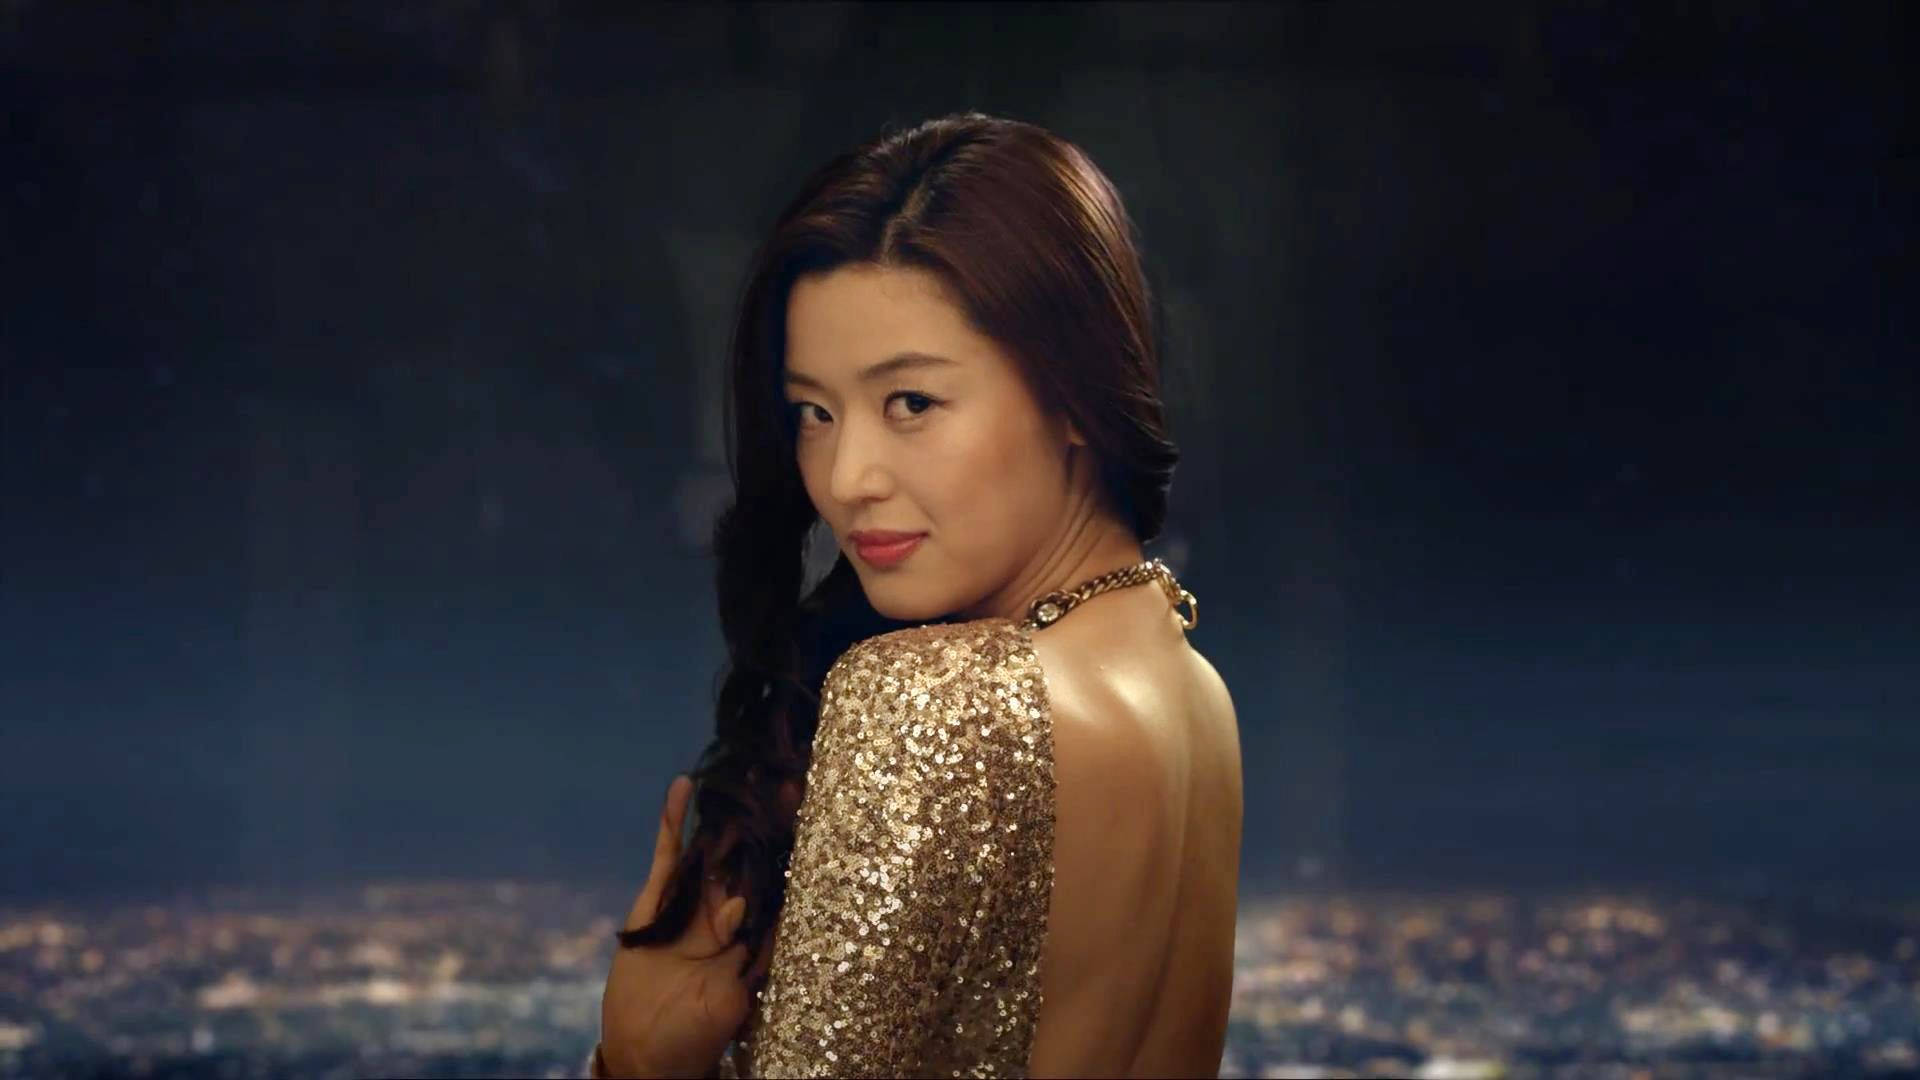 Jun Ji Hyun In Glamorous Gown Wallpaper